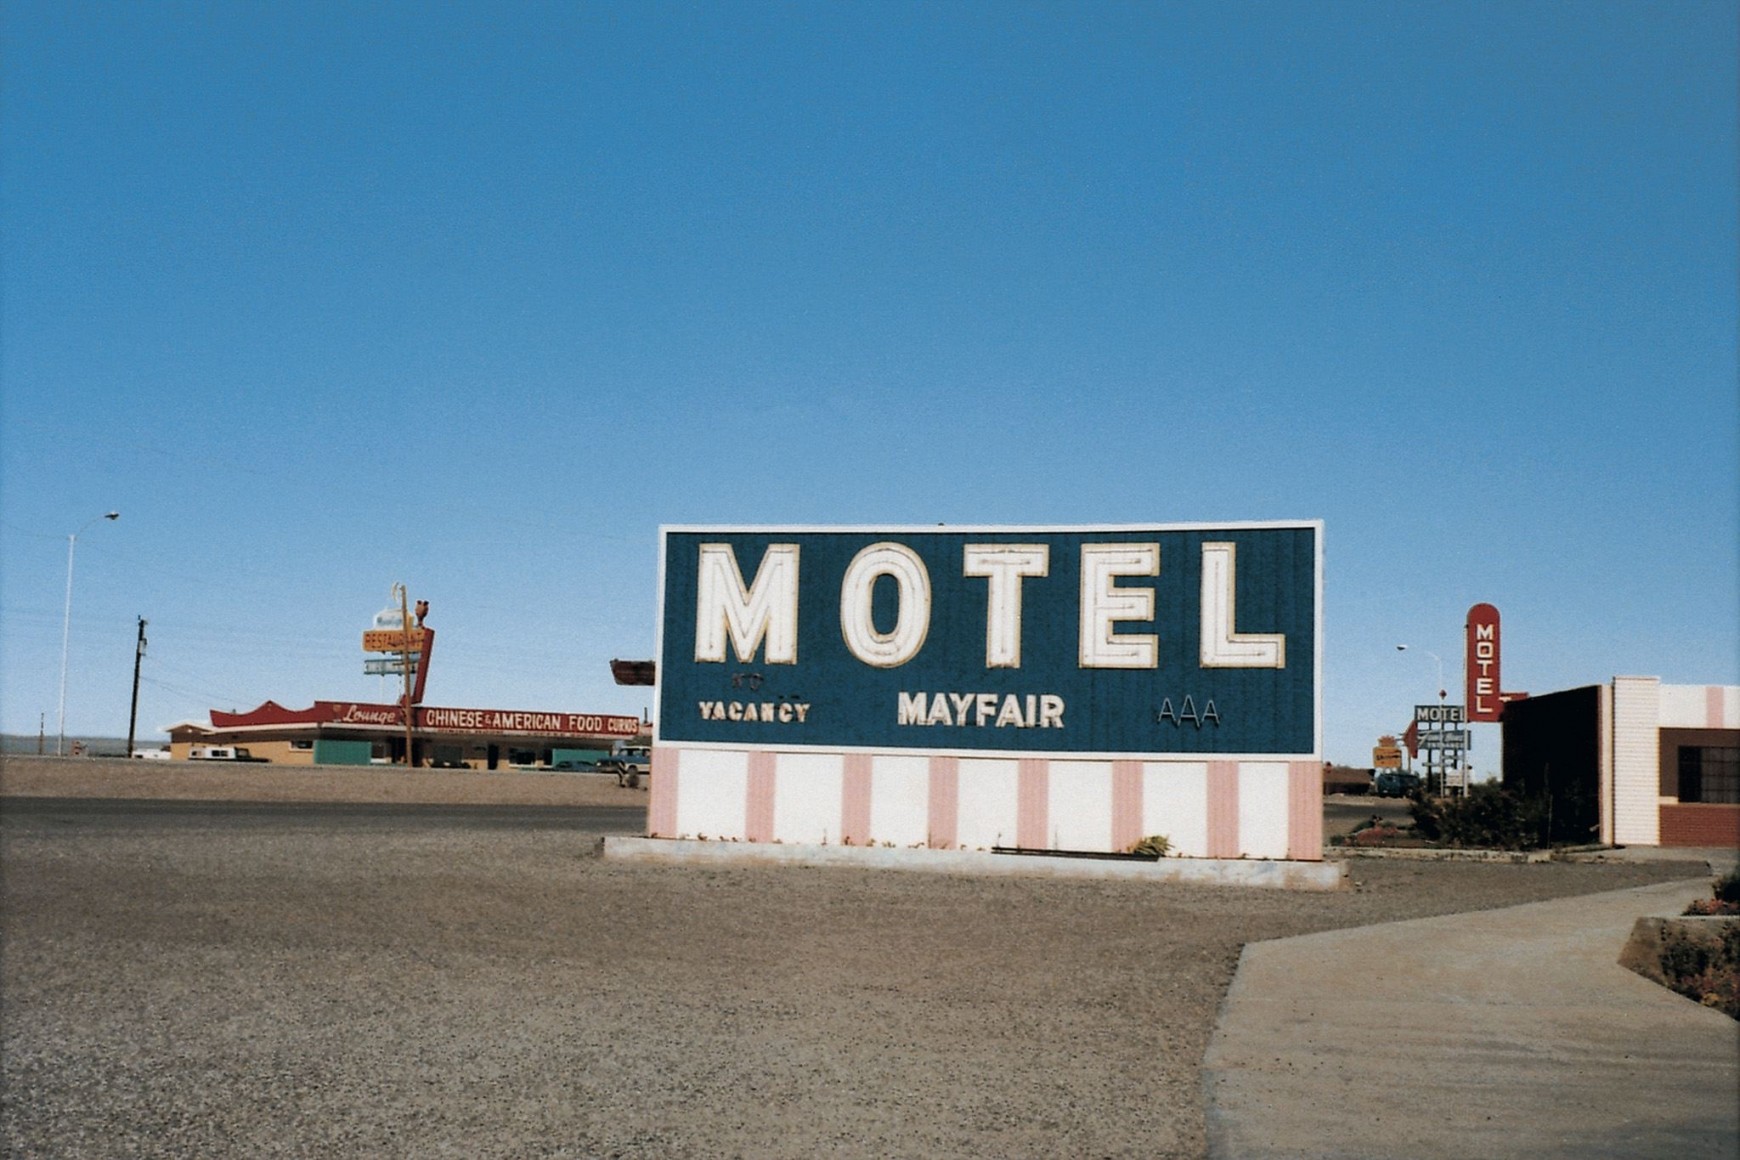 Мотель, Холбрук, Аризона, 1972. Автор Стивен Шор